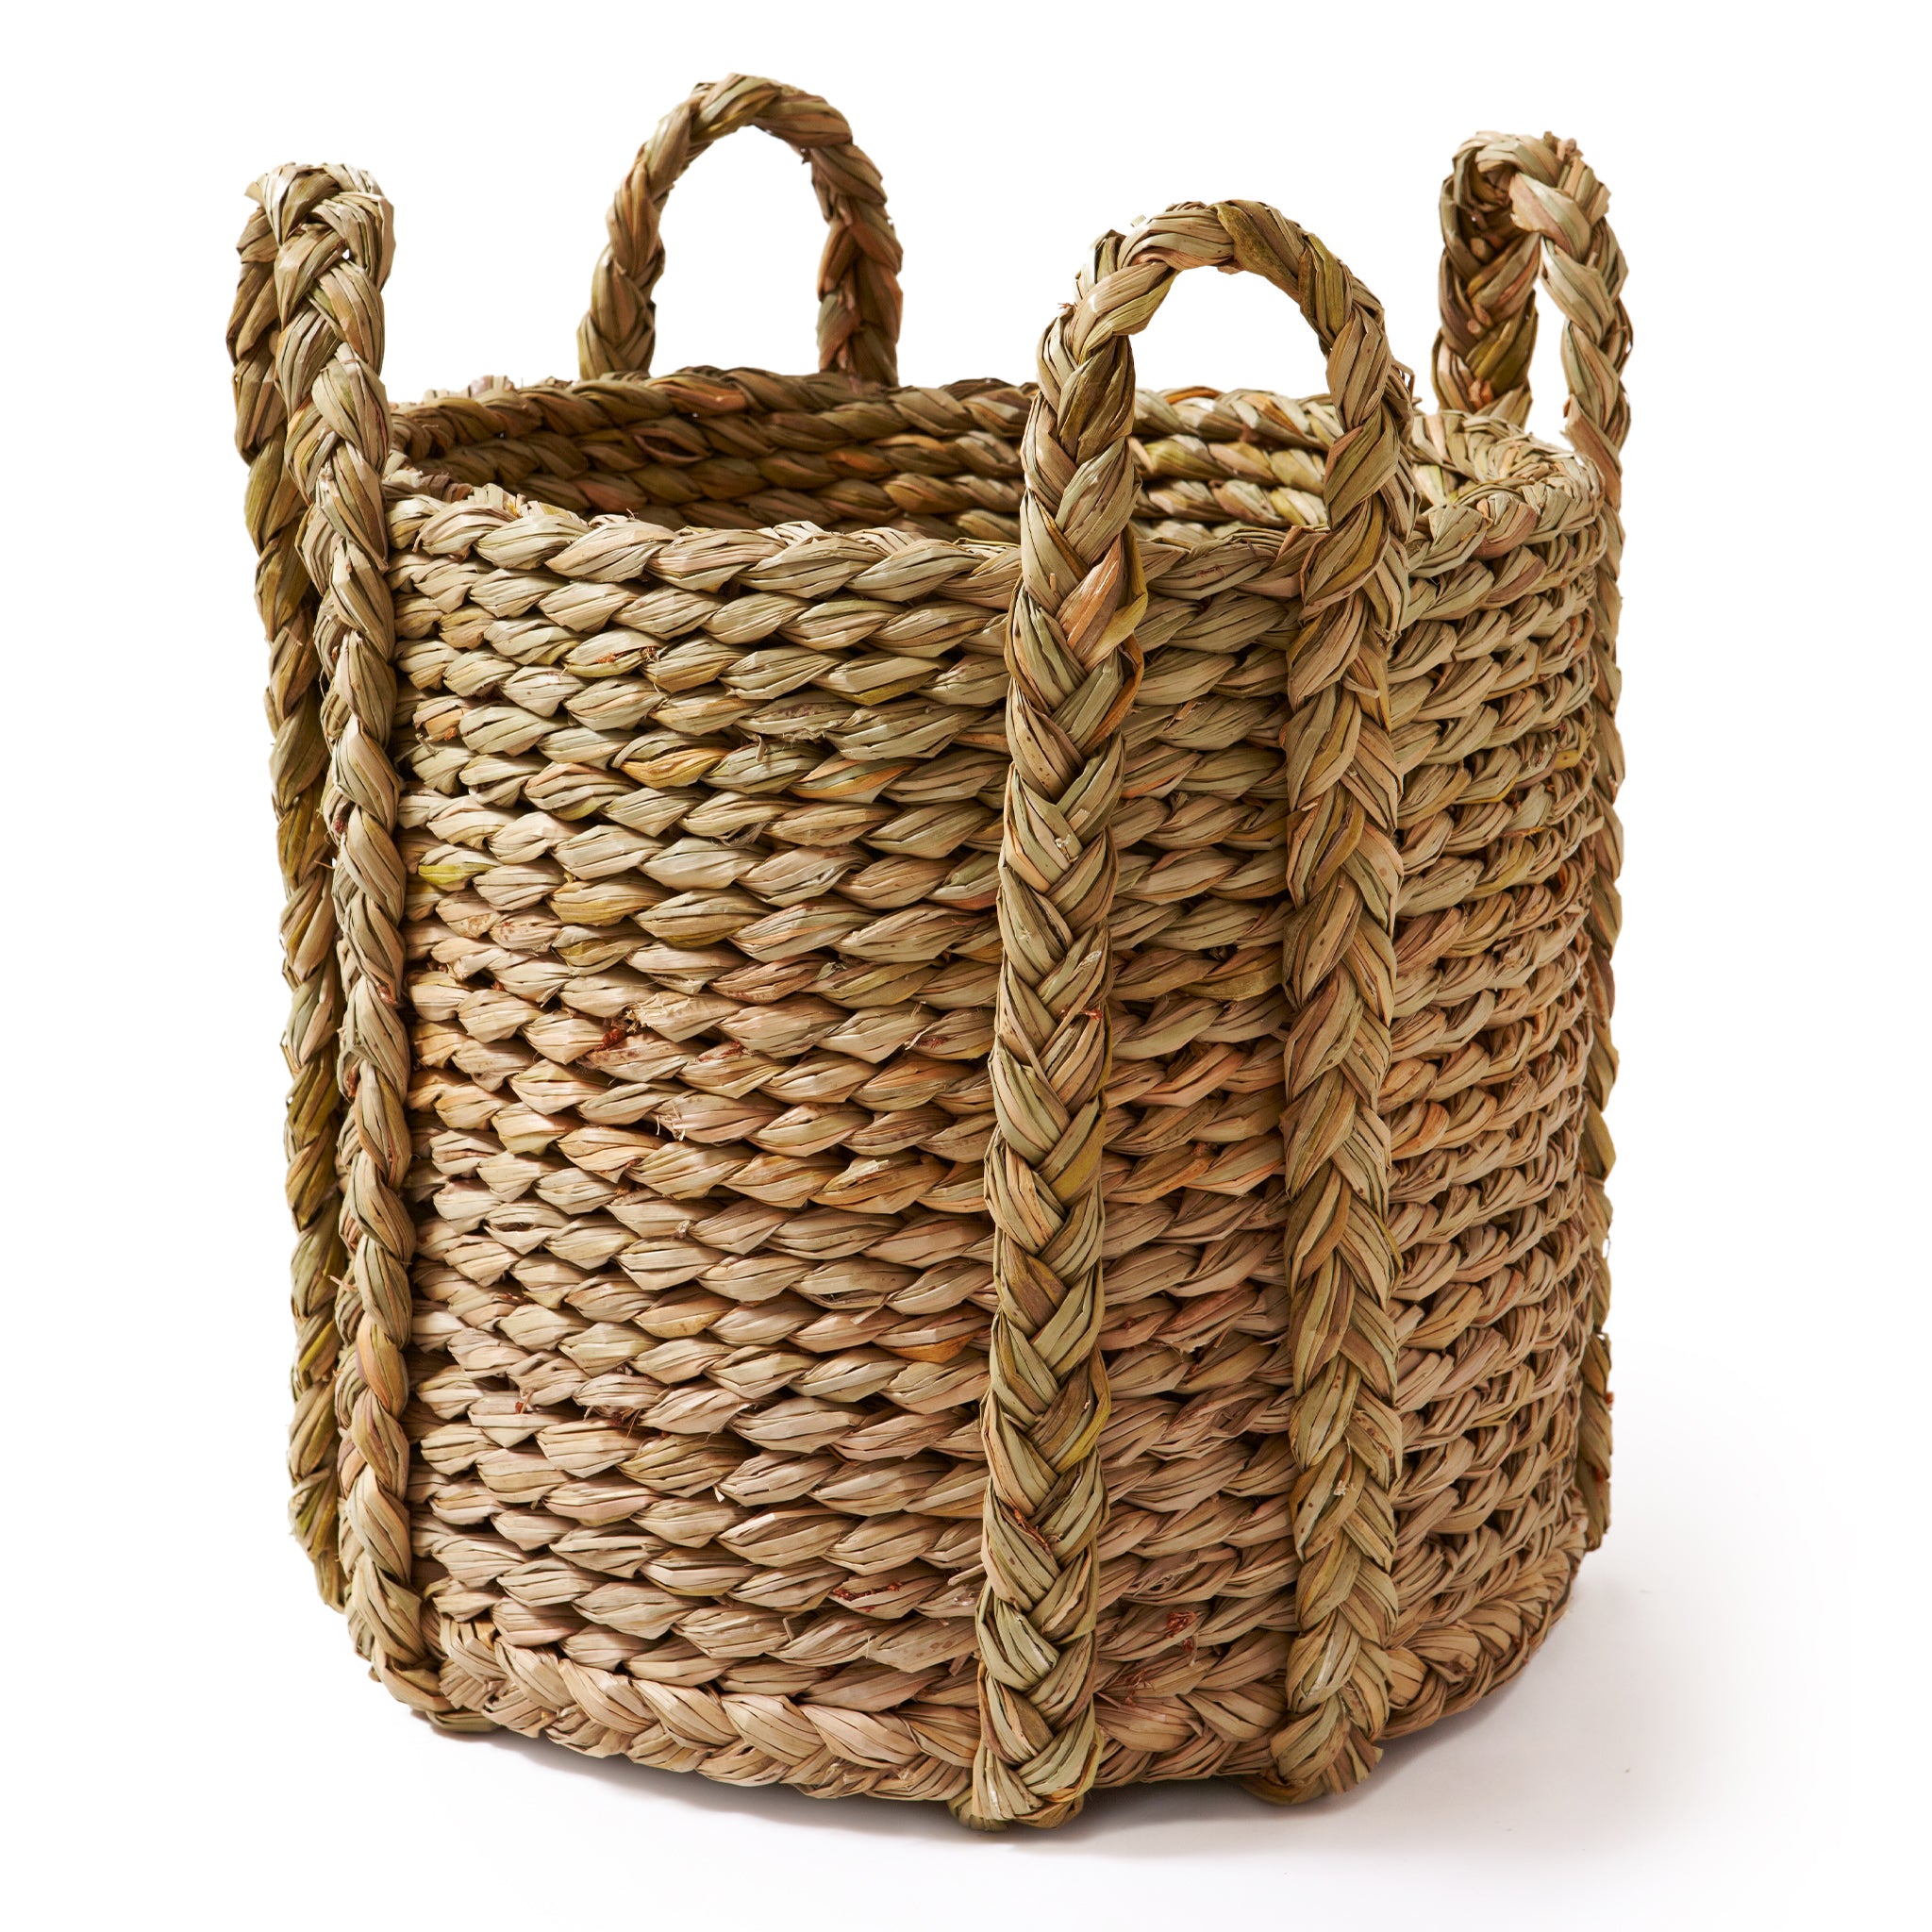 Round Rush Log Basket-Double Extra Large | Nicholas Engert Interiors